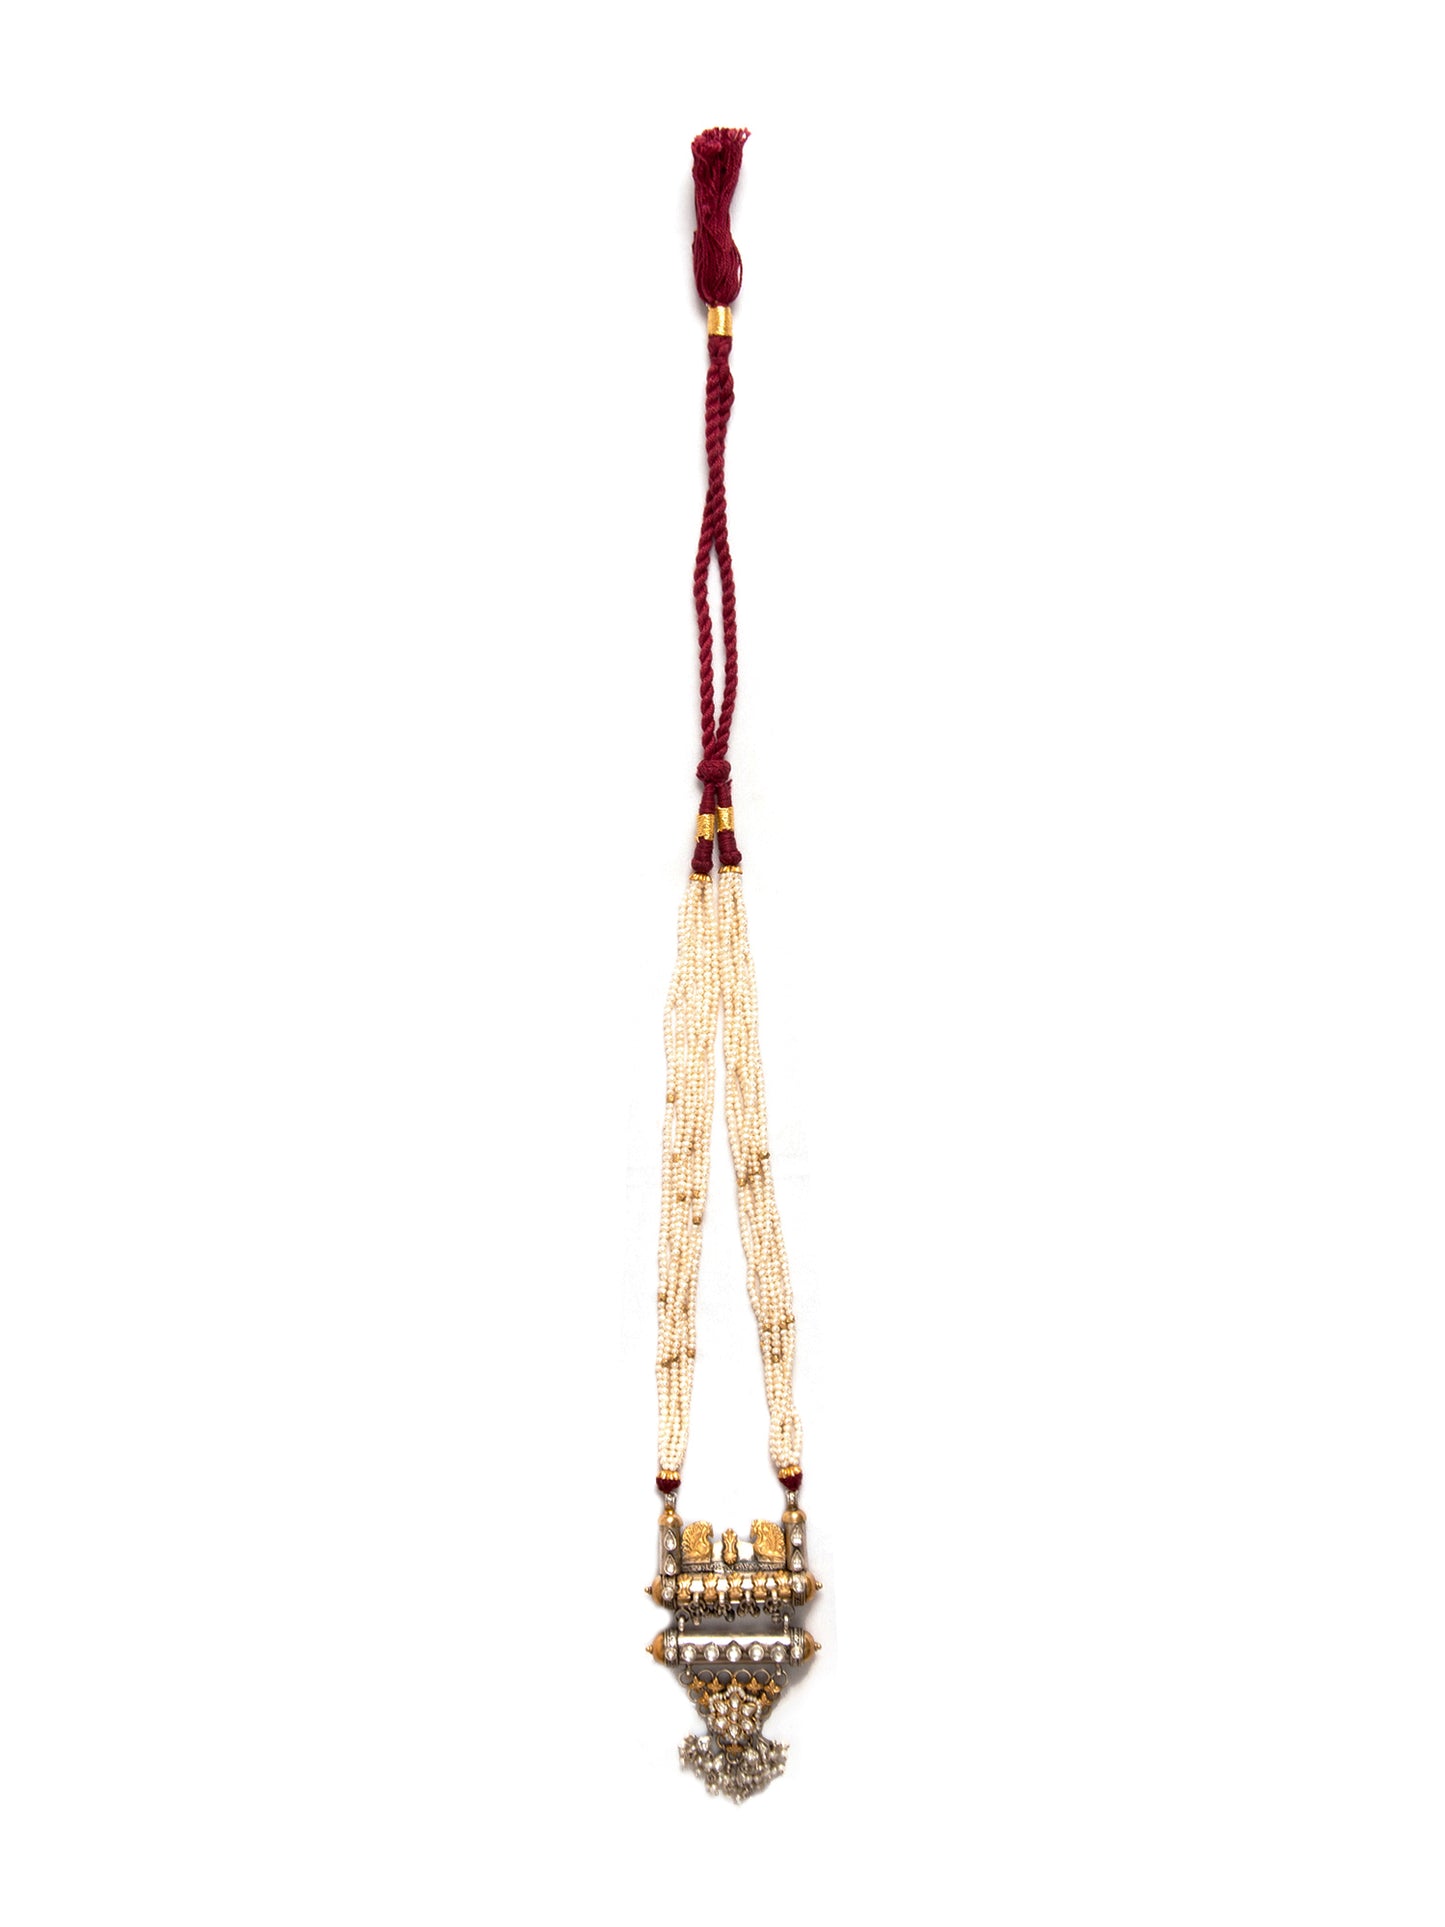 Svarnam Kundan and Pearl Long Necklace